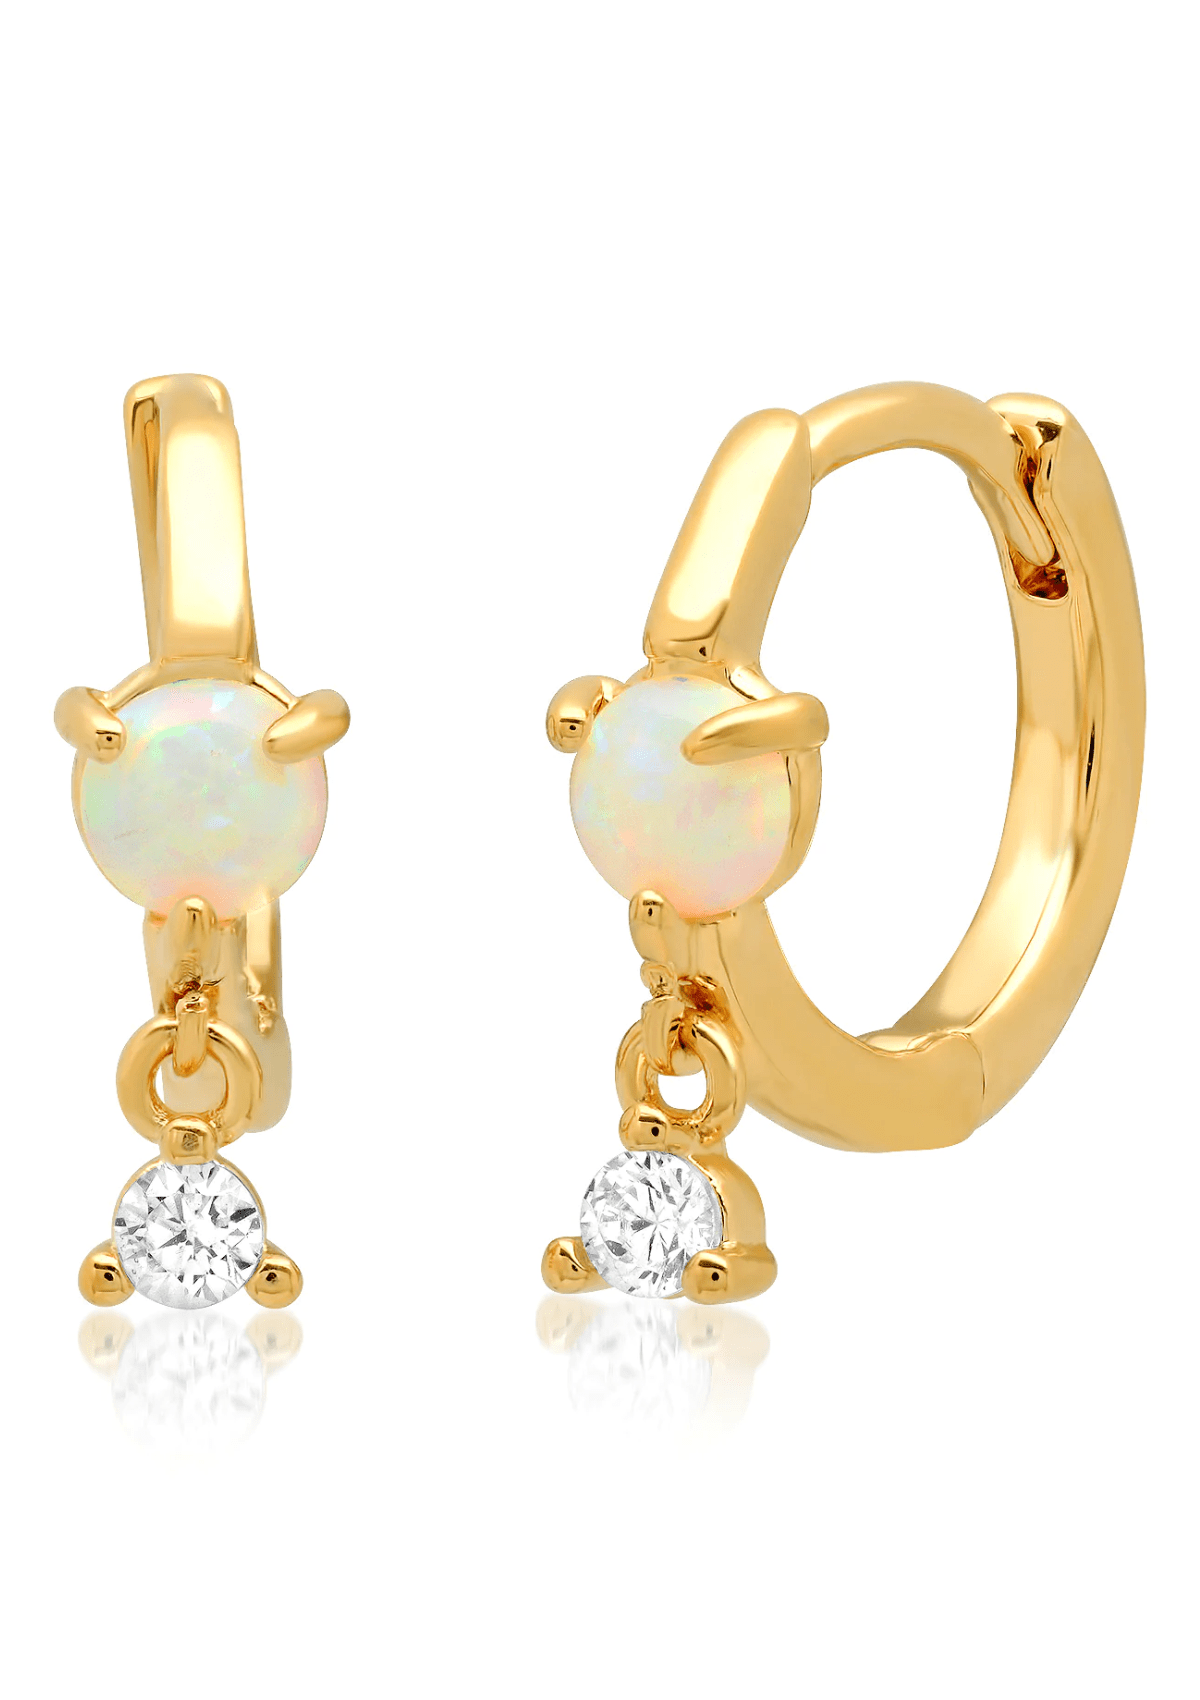 Gold Huggie Earrings with White Opal and Single CZ Drop -Tai Rittichai- Ruby Jane-